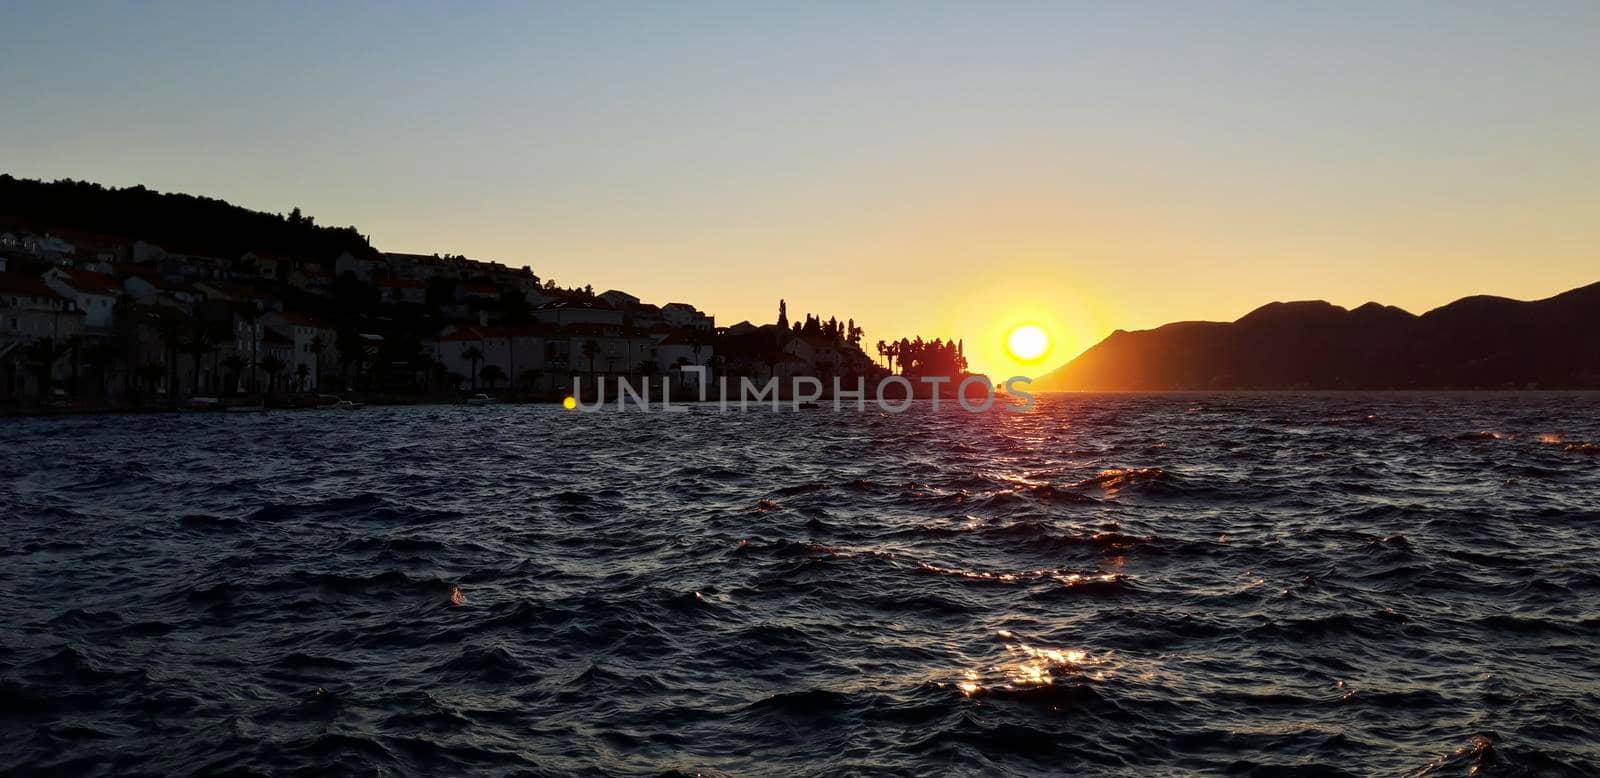 Sunset At Adriatic Sea Croatia by swissChard7